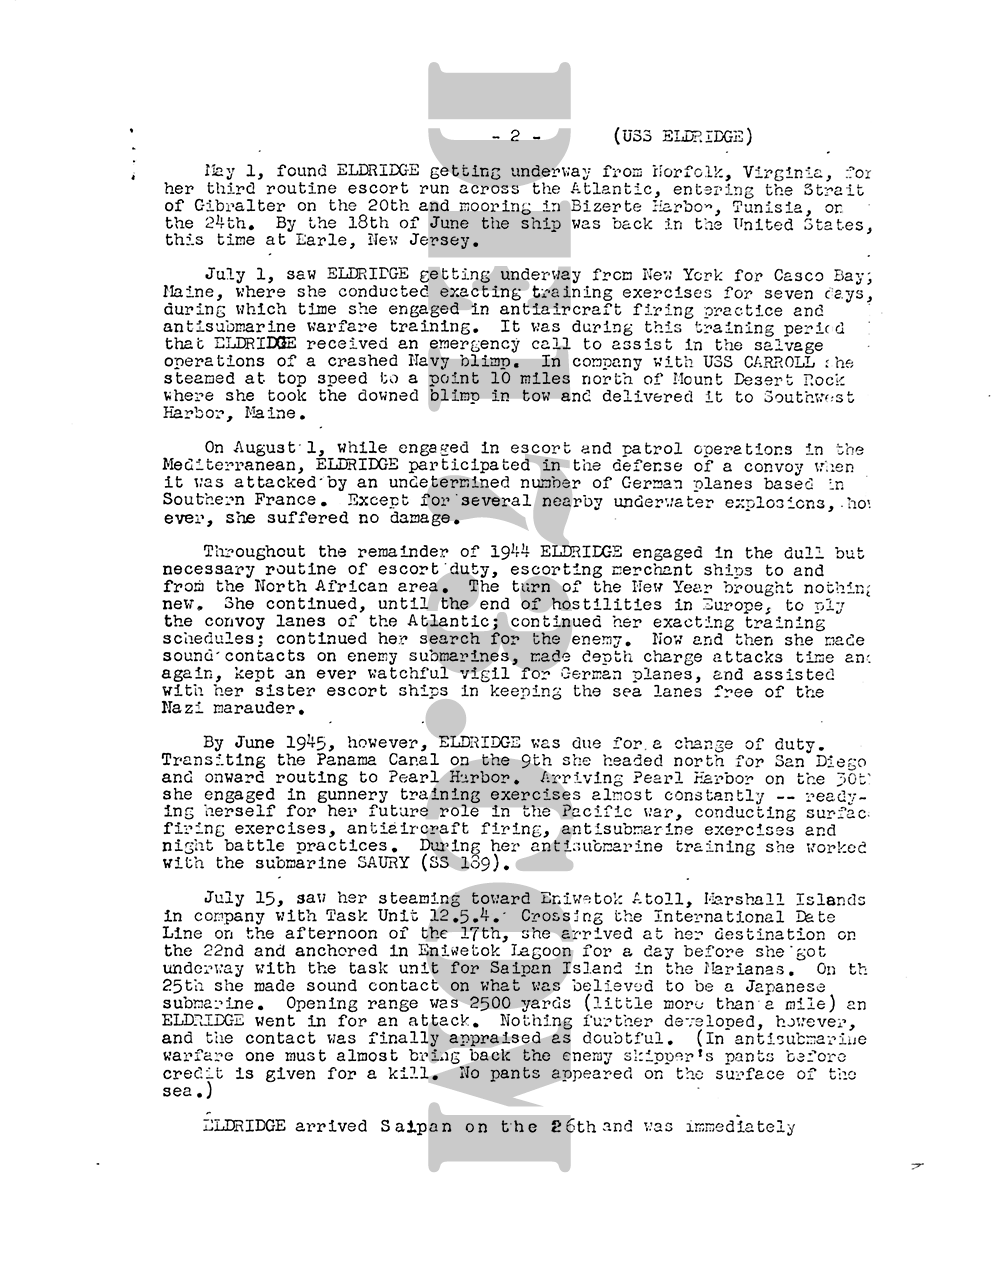 USS Eldridge Microfilm Page 002 - History